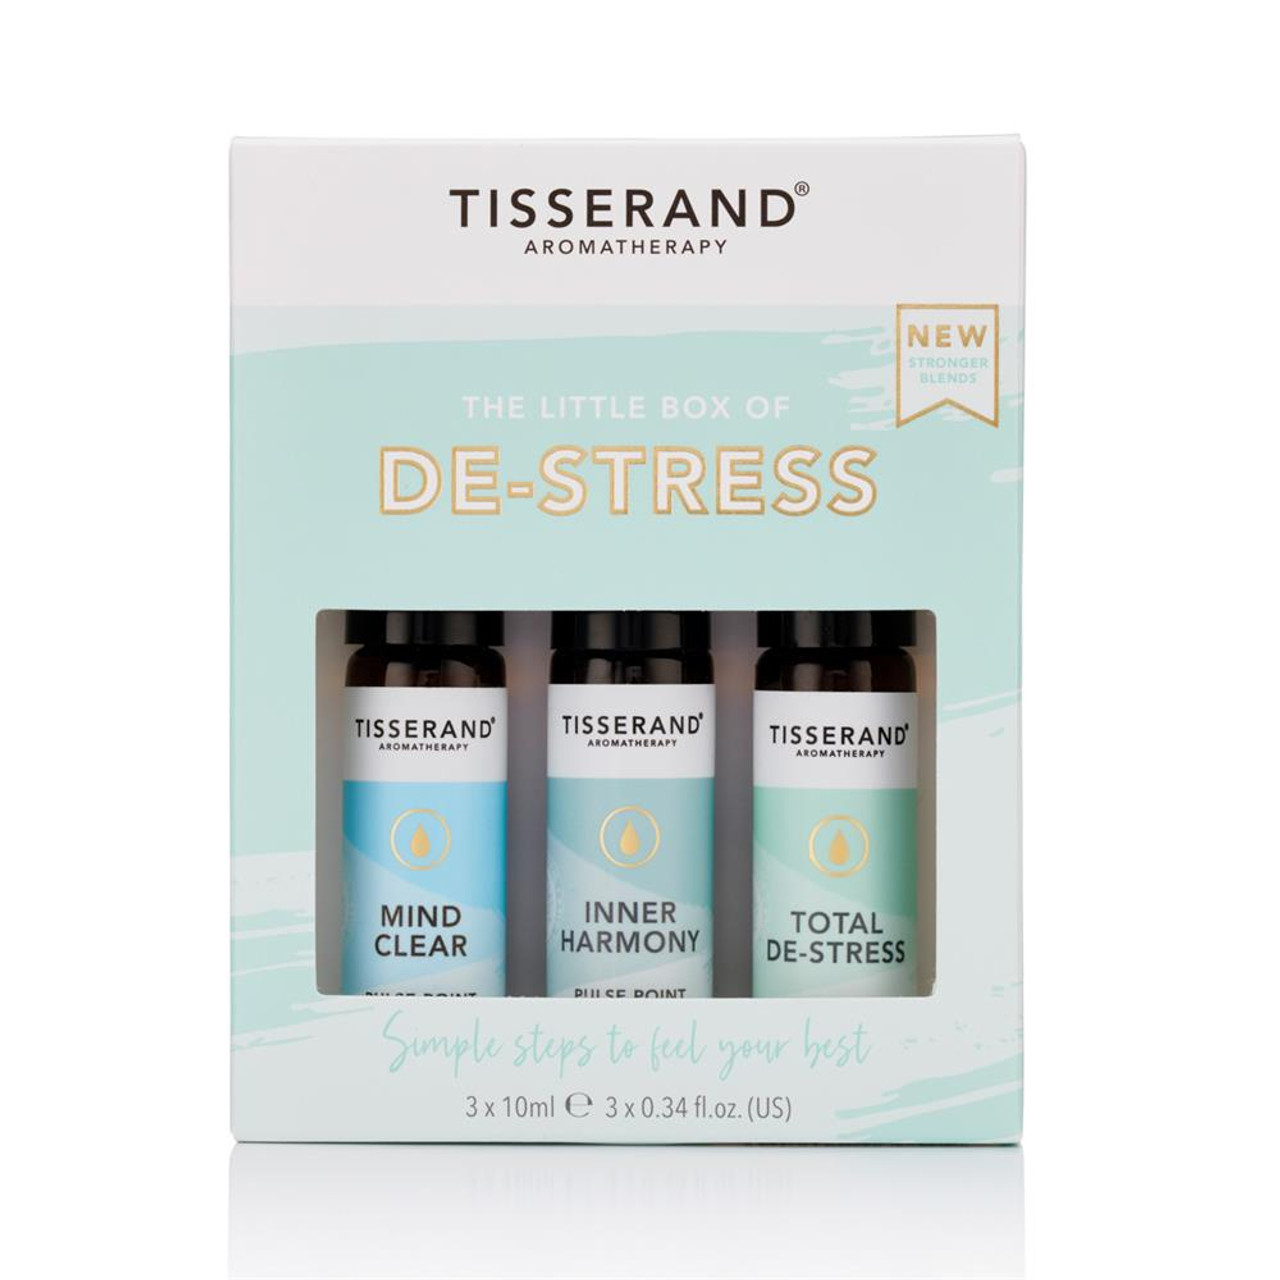 Tisserand Aromatherapy - The Little Box of De-Stress 3x 10ml RRP £13.45 CLEARANCE XL £9.99